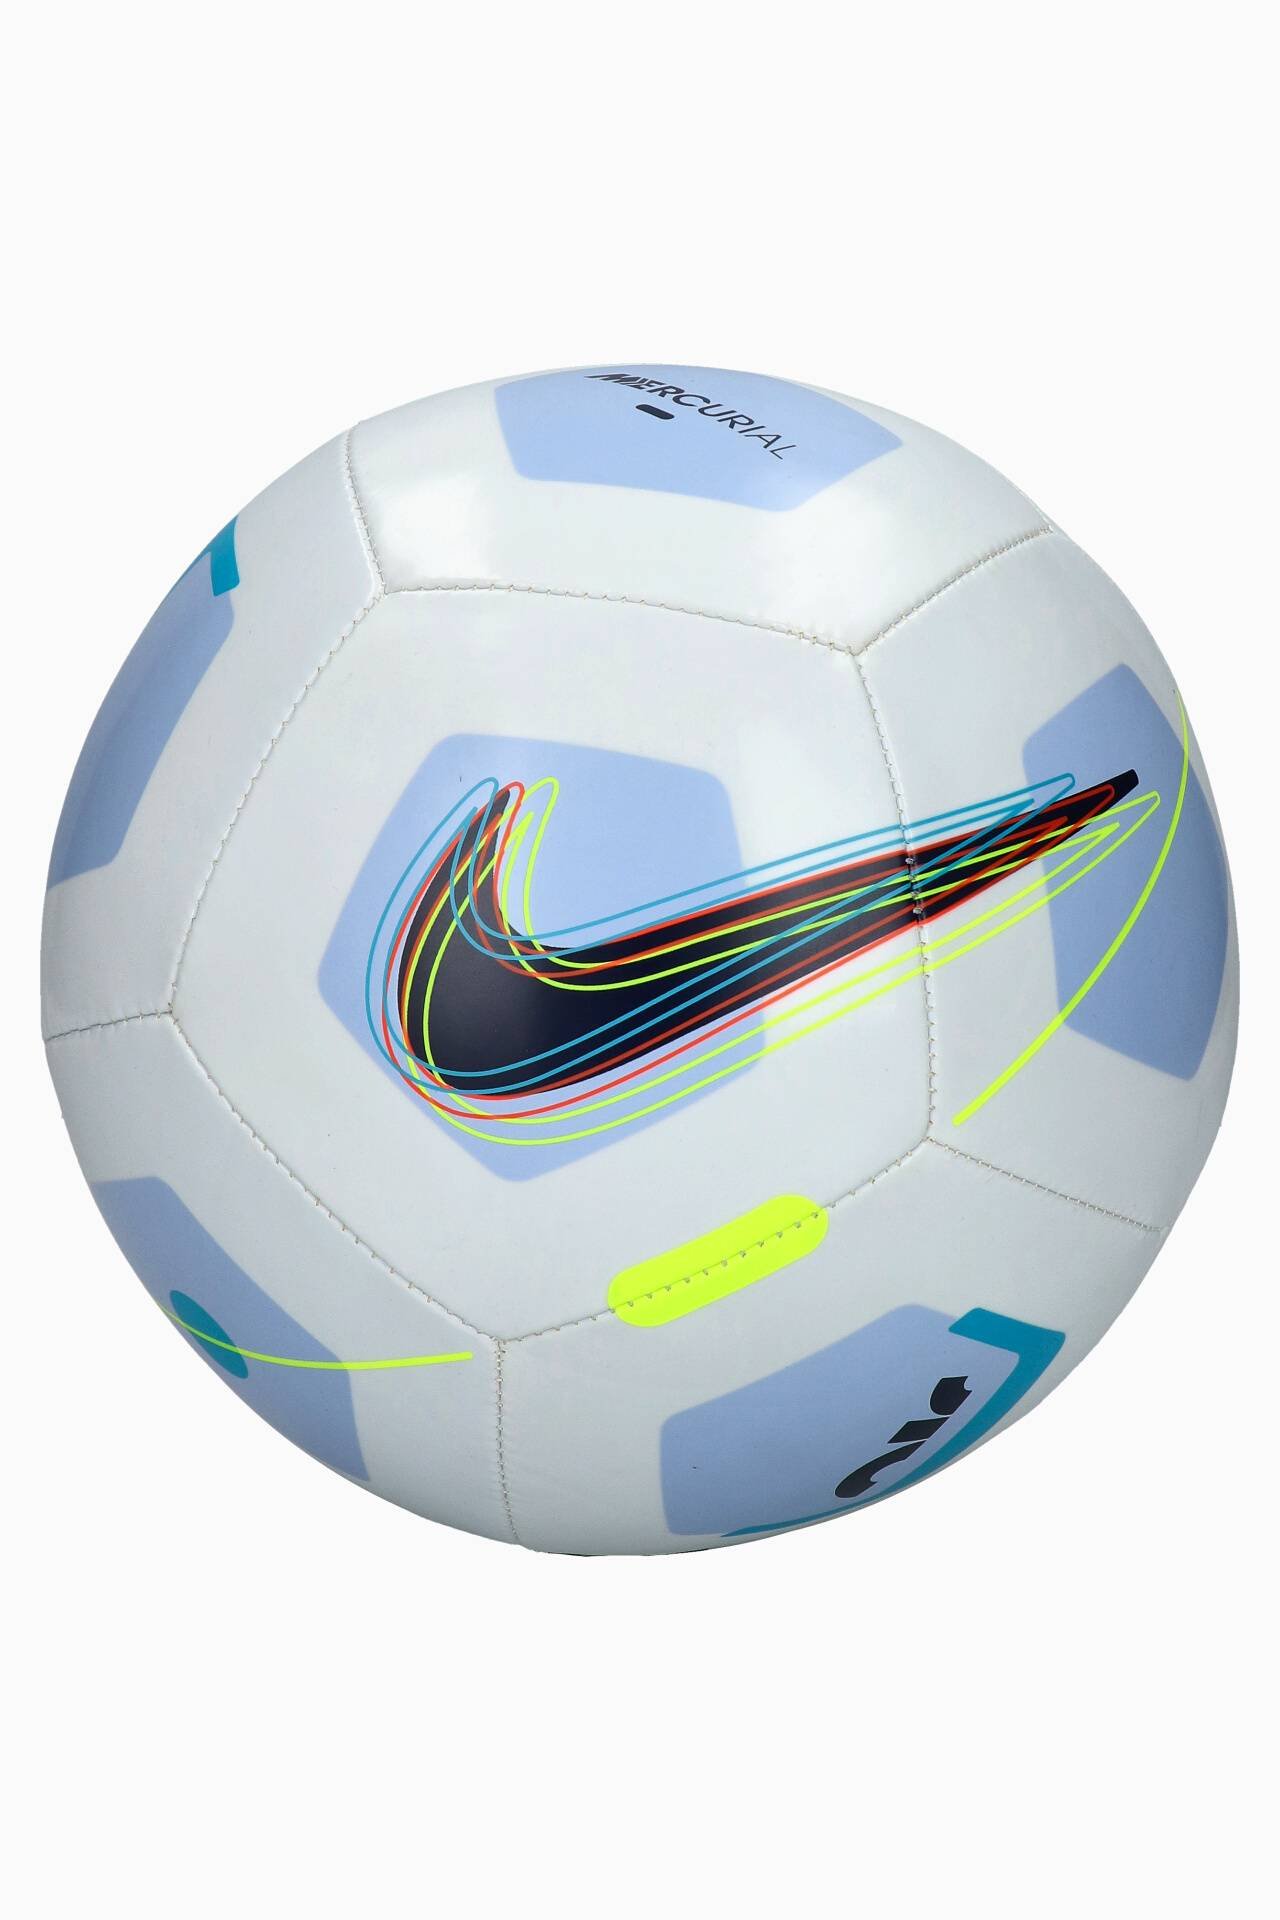 Ball Nike Mercurial Fade size 5 | R-GOL.com - Football & equipment